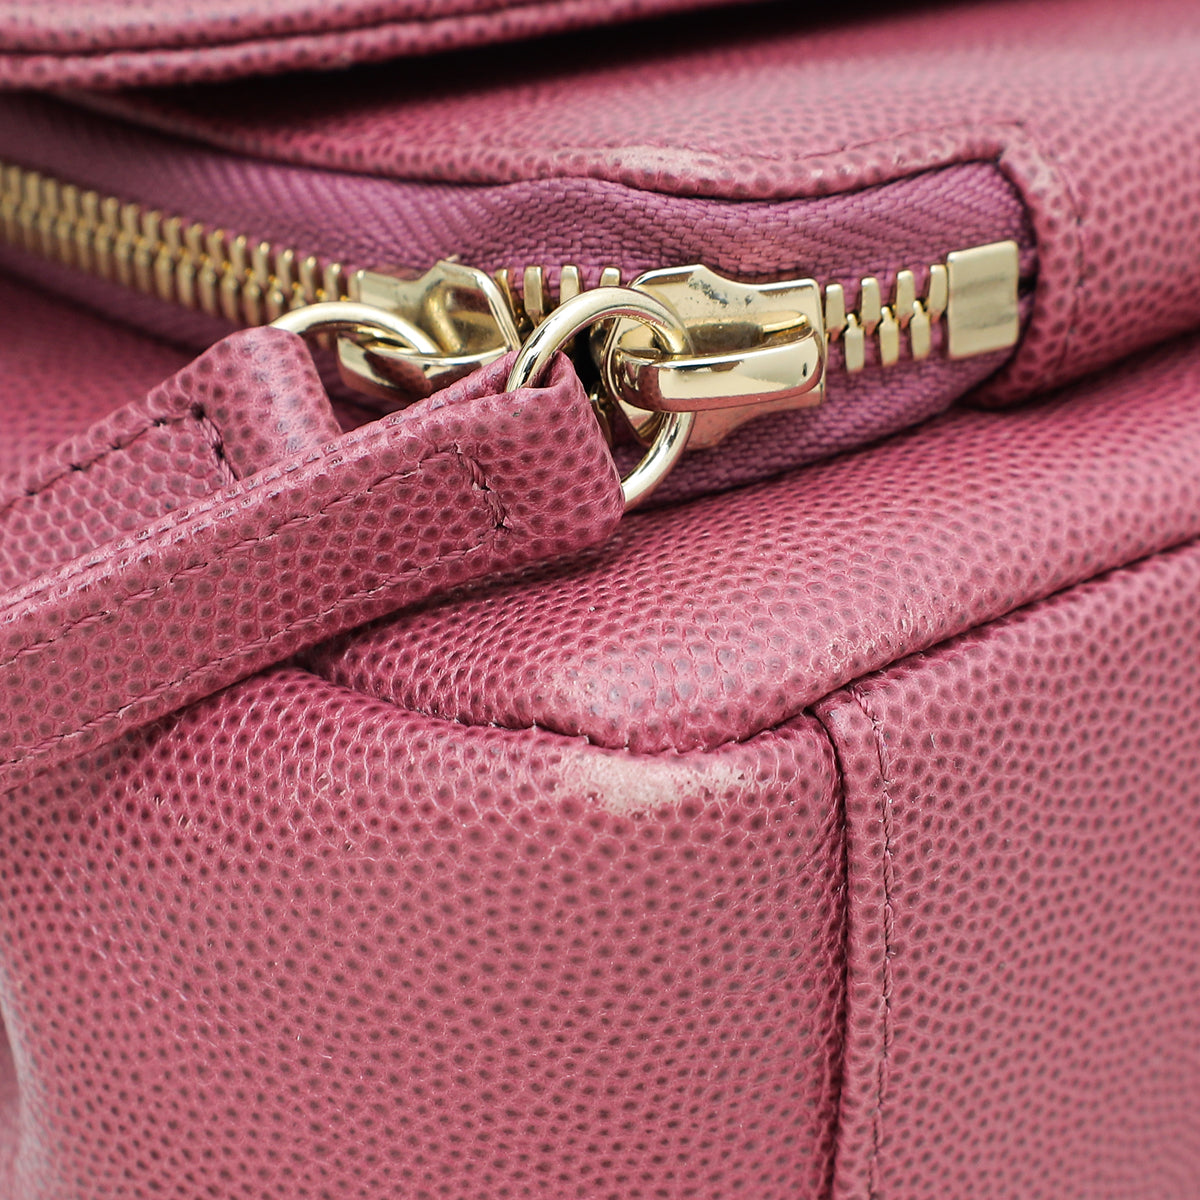 Chanel Mauve CC Business Affinity Small Bag